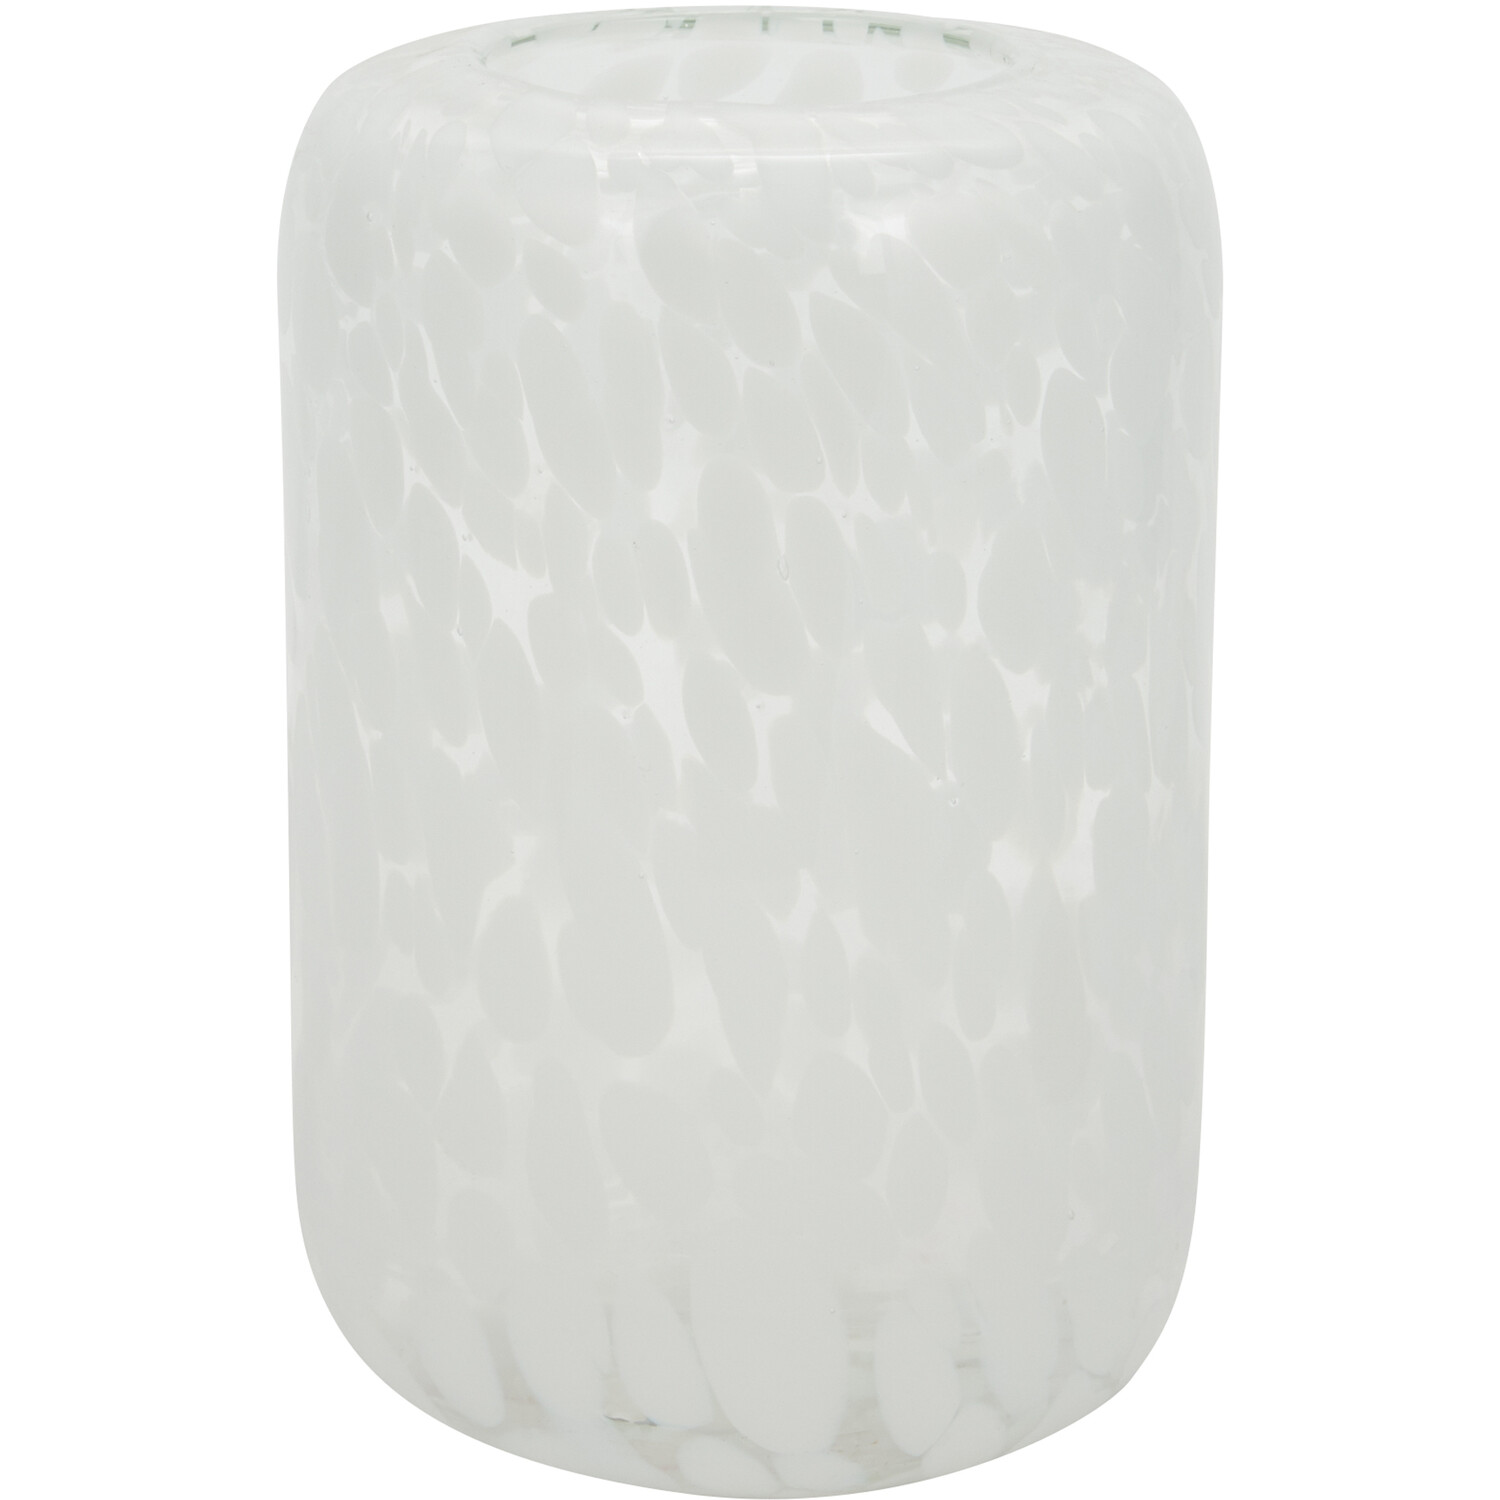 Confetti Vase - White Image 2